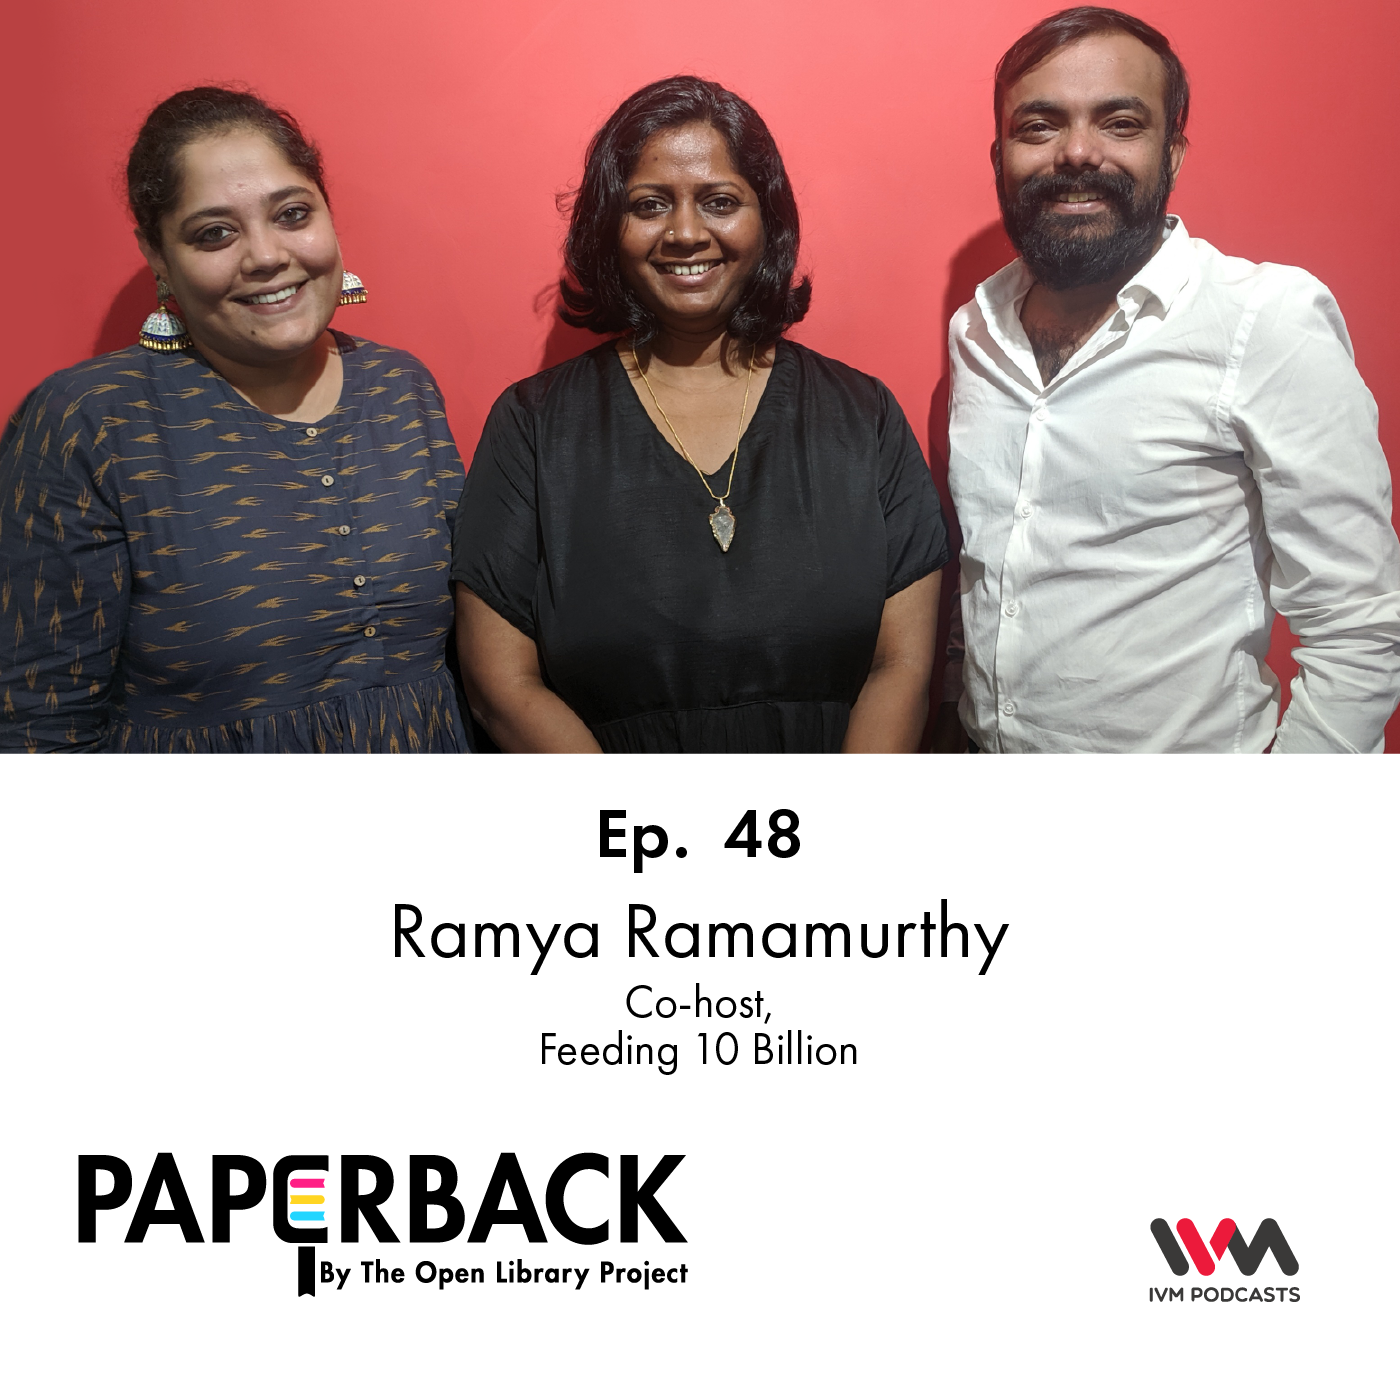 Ep. 48: Ramya Ramamurthy